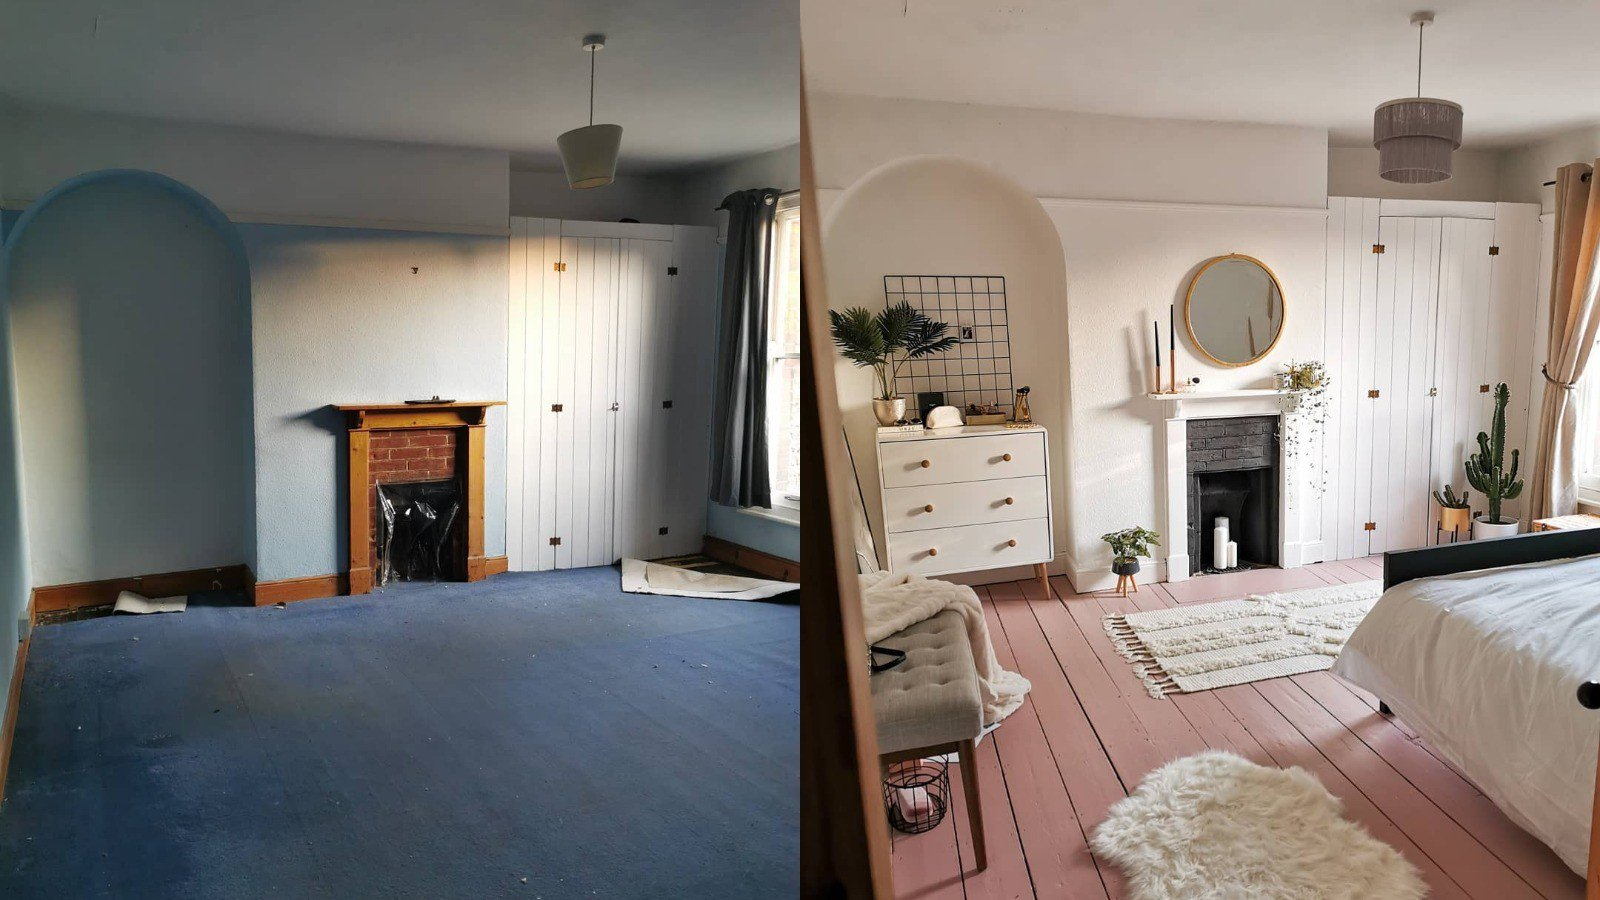 Комната сменила. Комната до и после. Интерьер до и после. Комната до и после ремонта. Спальня до и после ремонта.